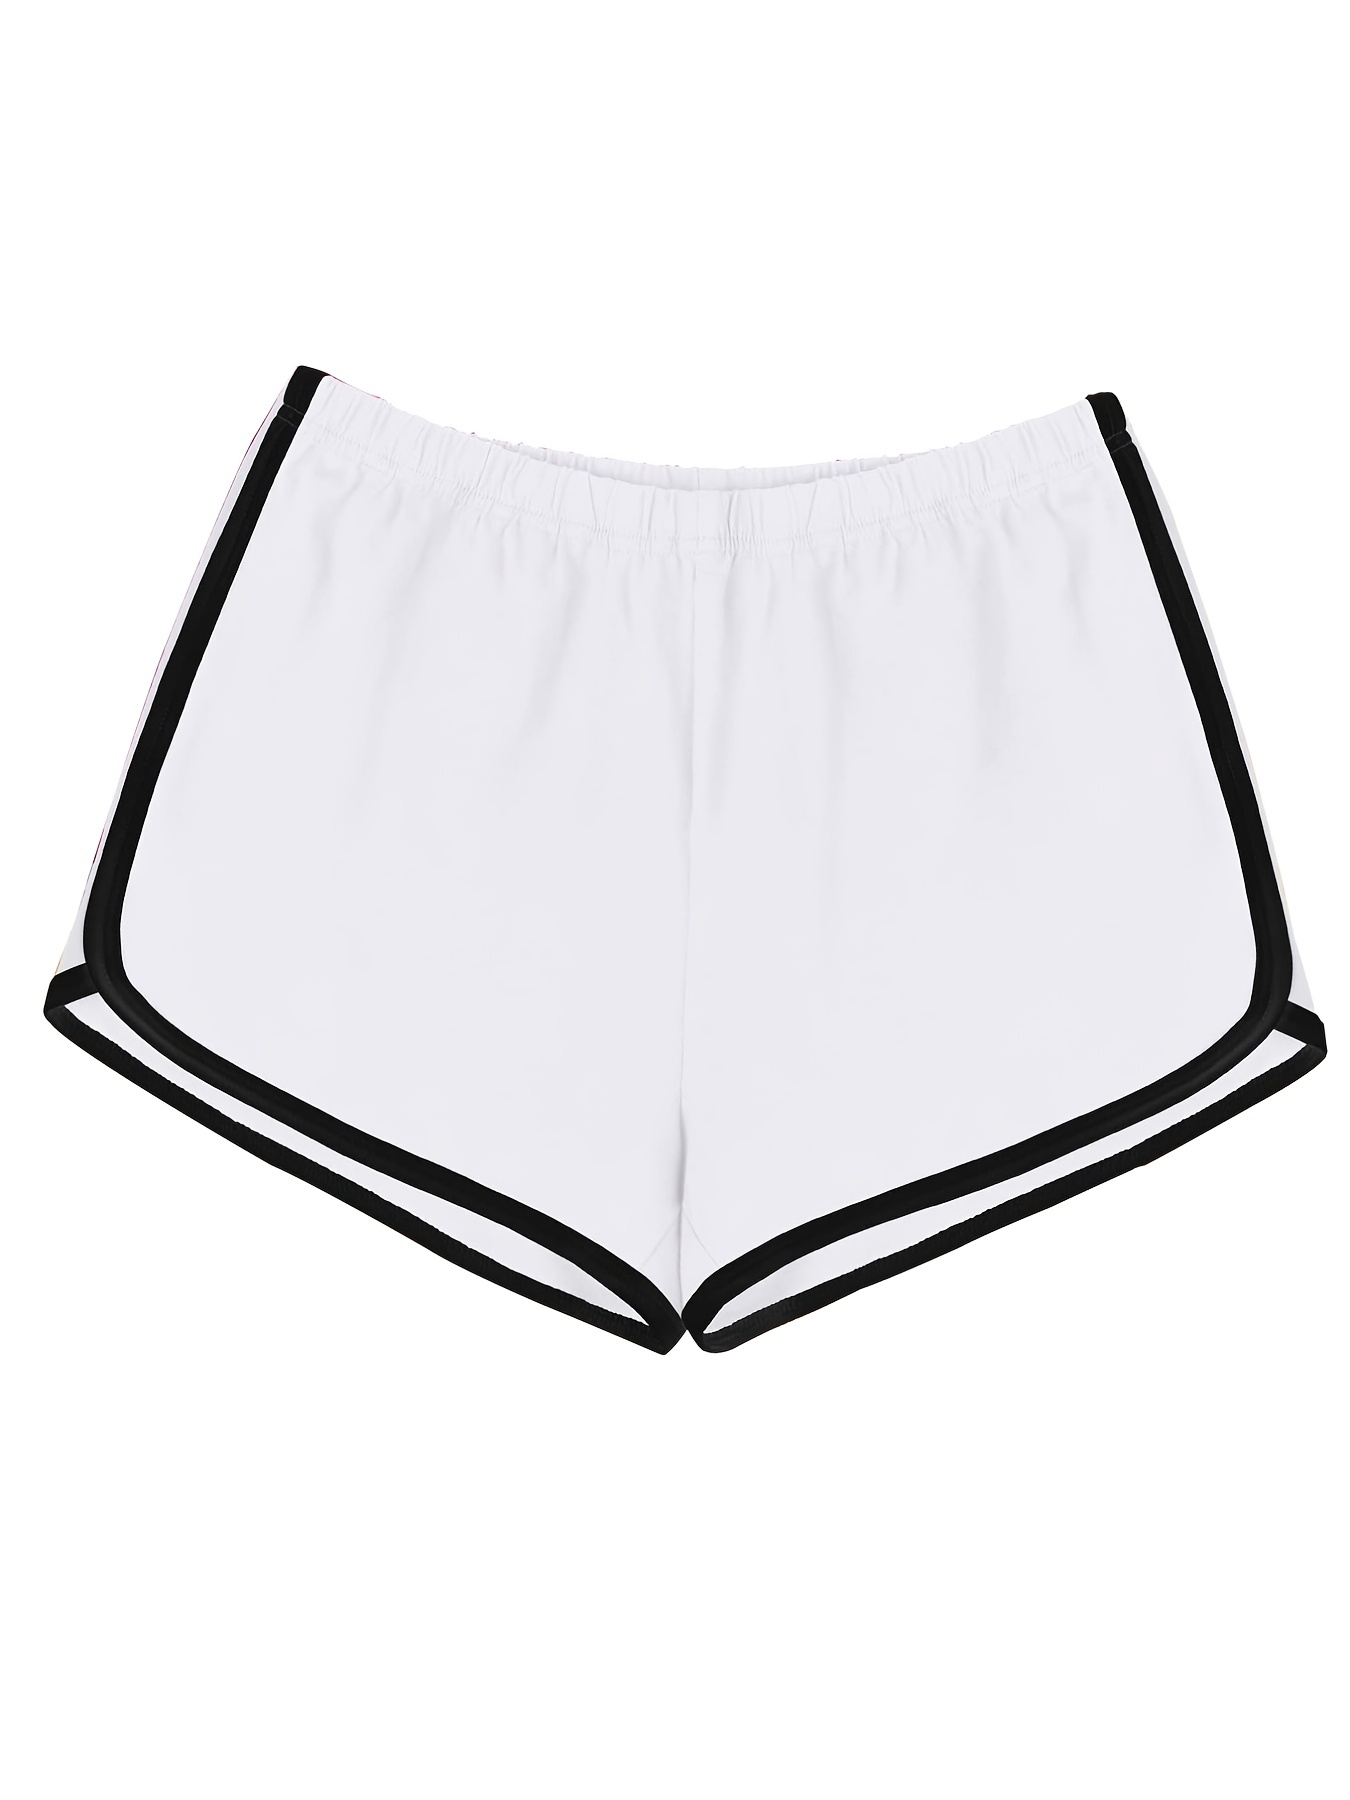 Womens Sports Shorts Casual Ladies Beach Summer Running Gym Yoga Hot Pants  (black)